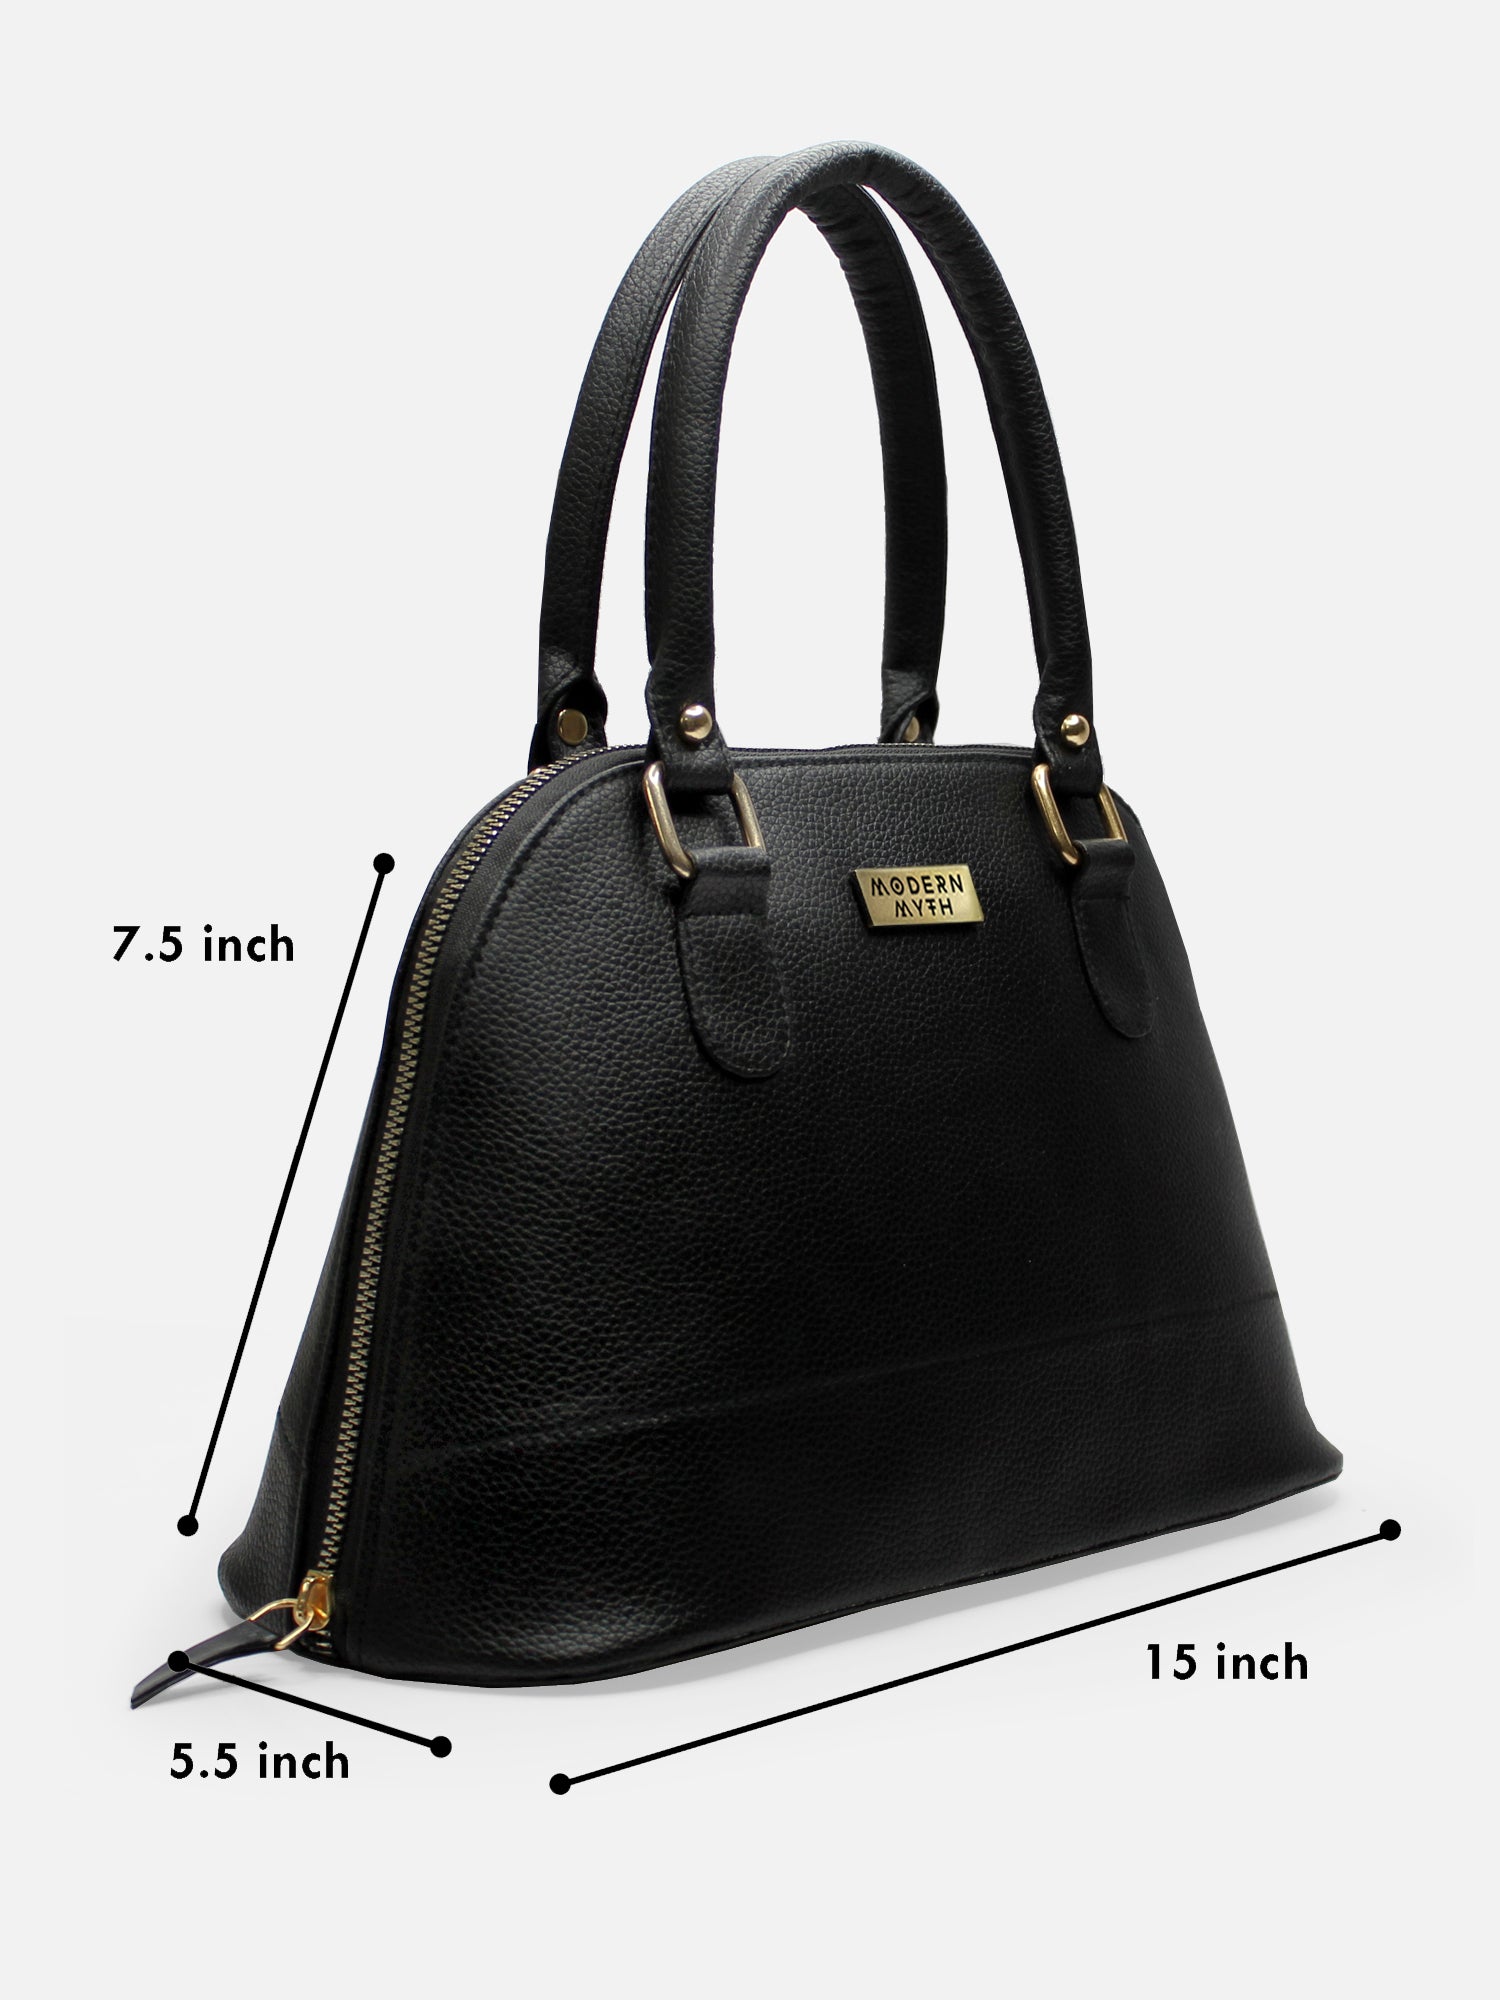 Buy Fendi Shoulder Bag Online In India -  India